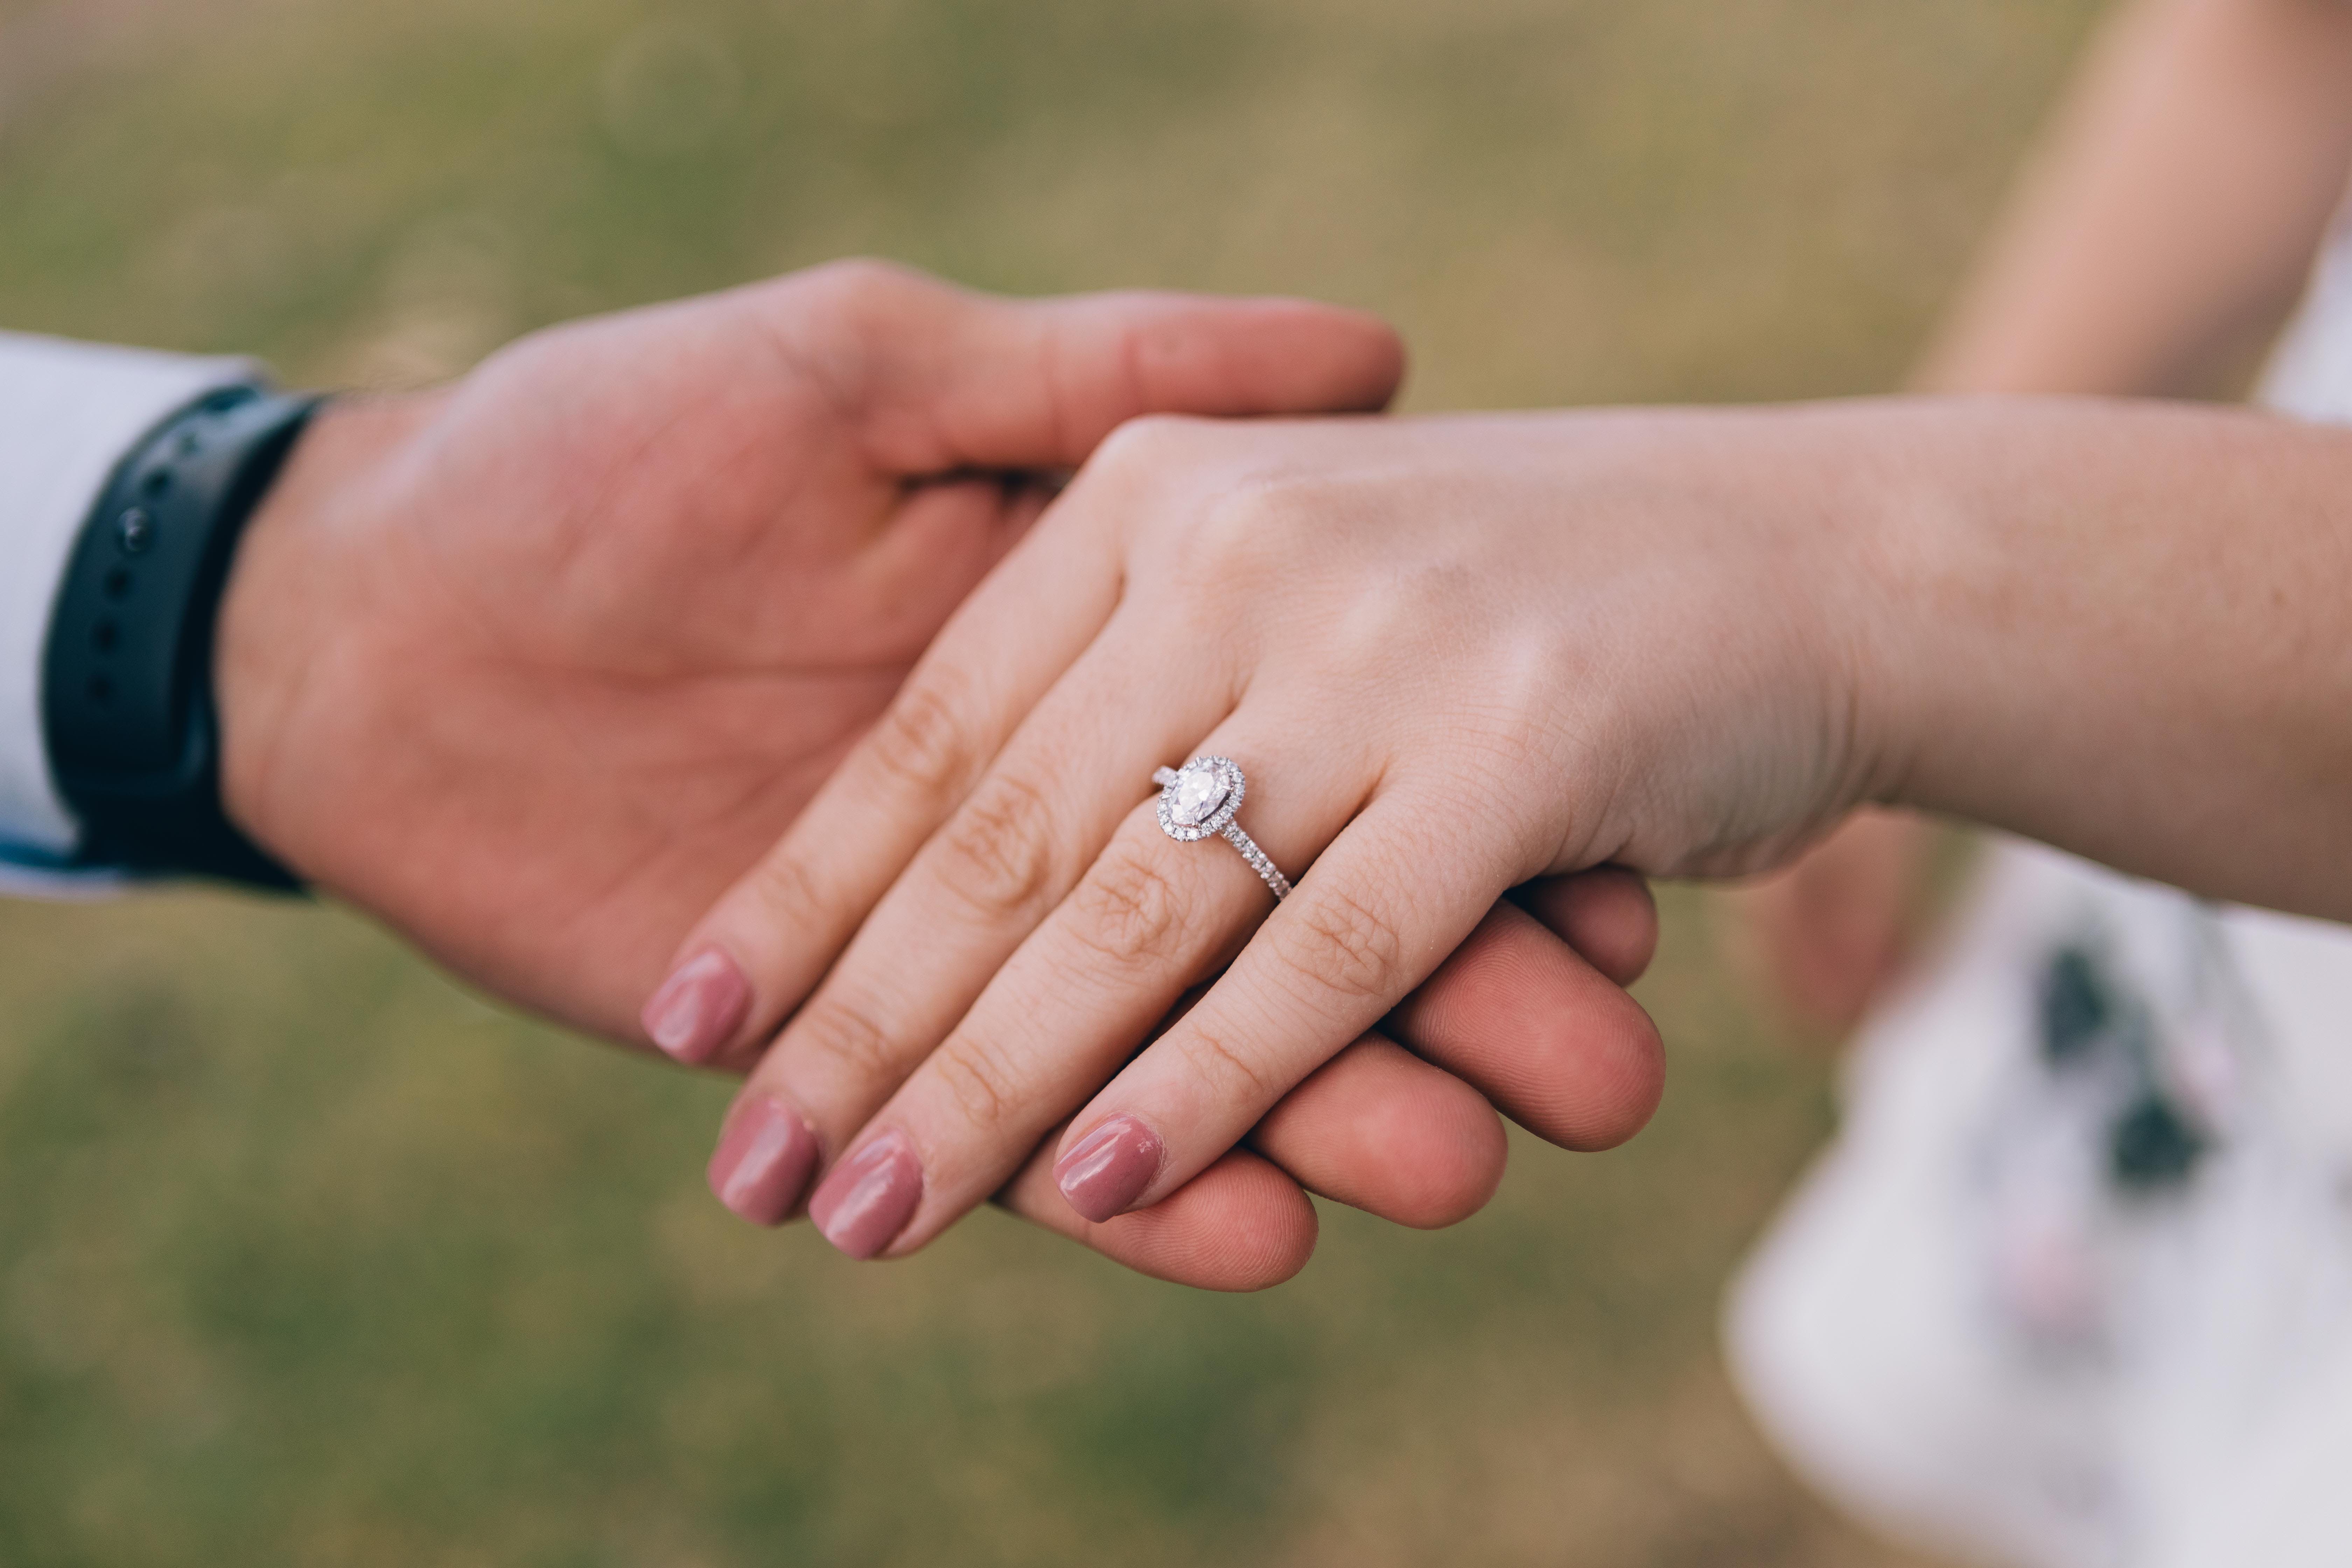 Engagement ring | Source: Pexels